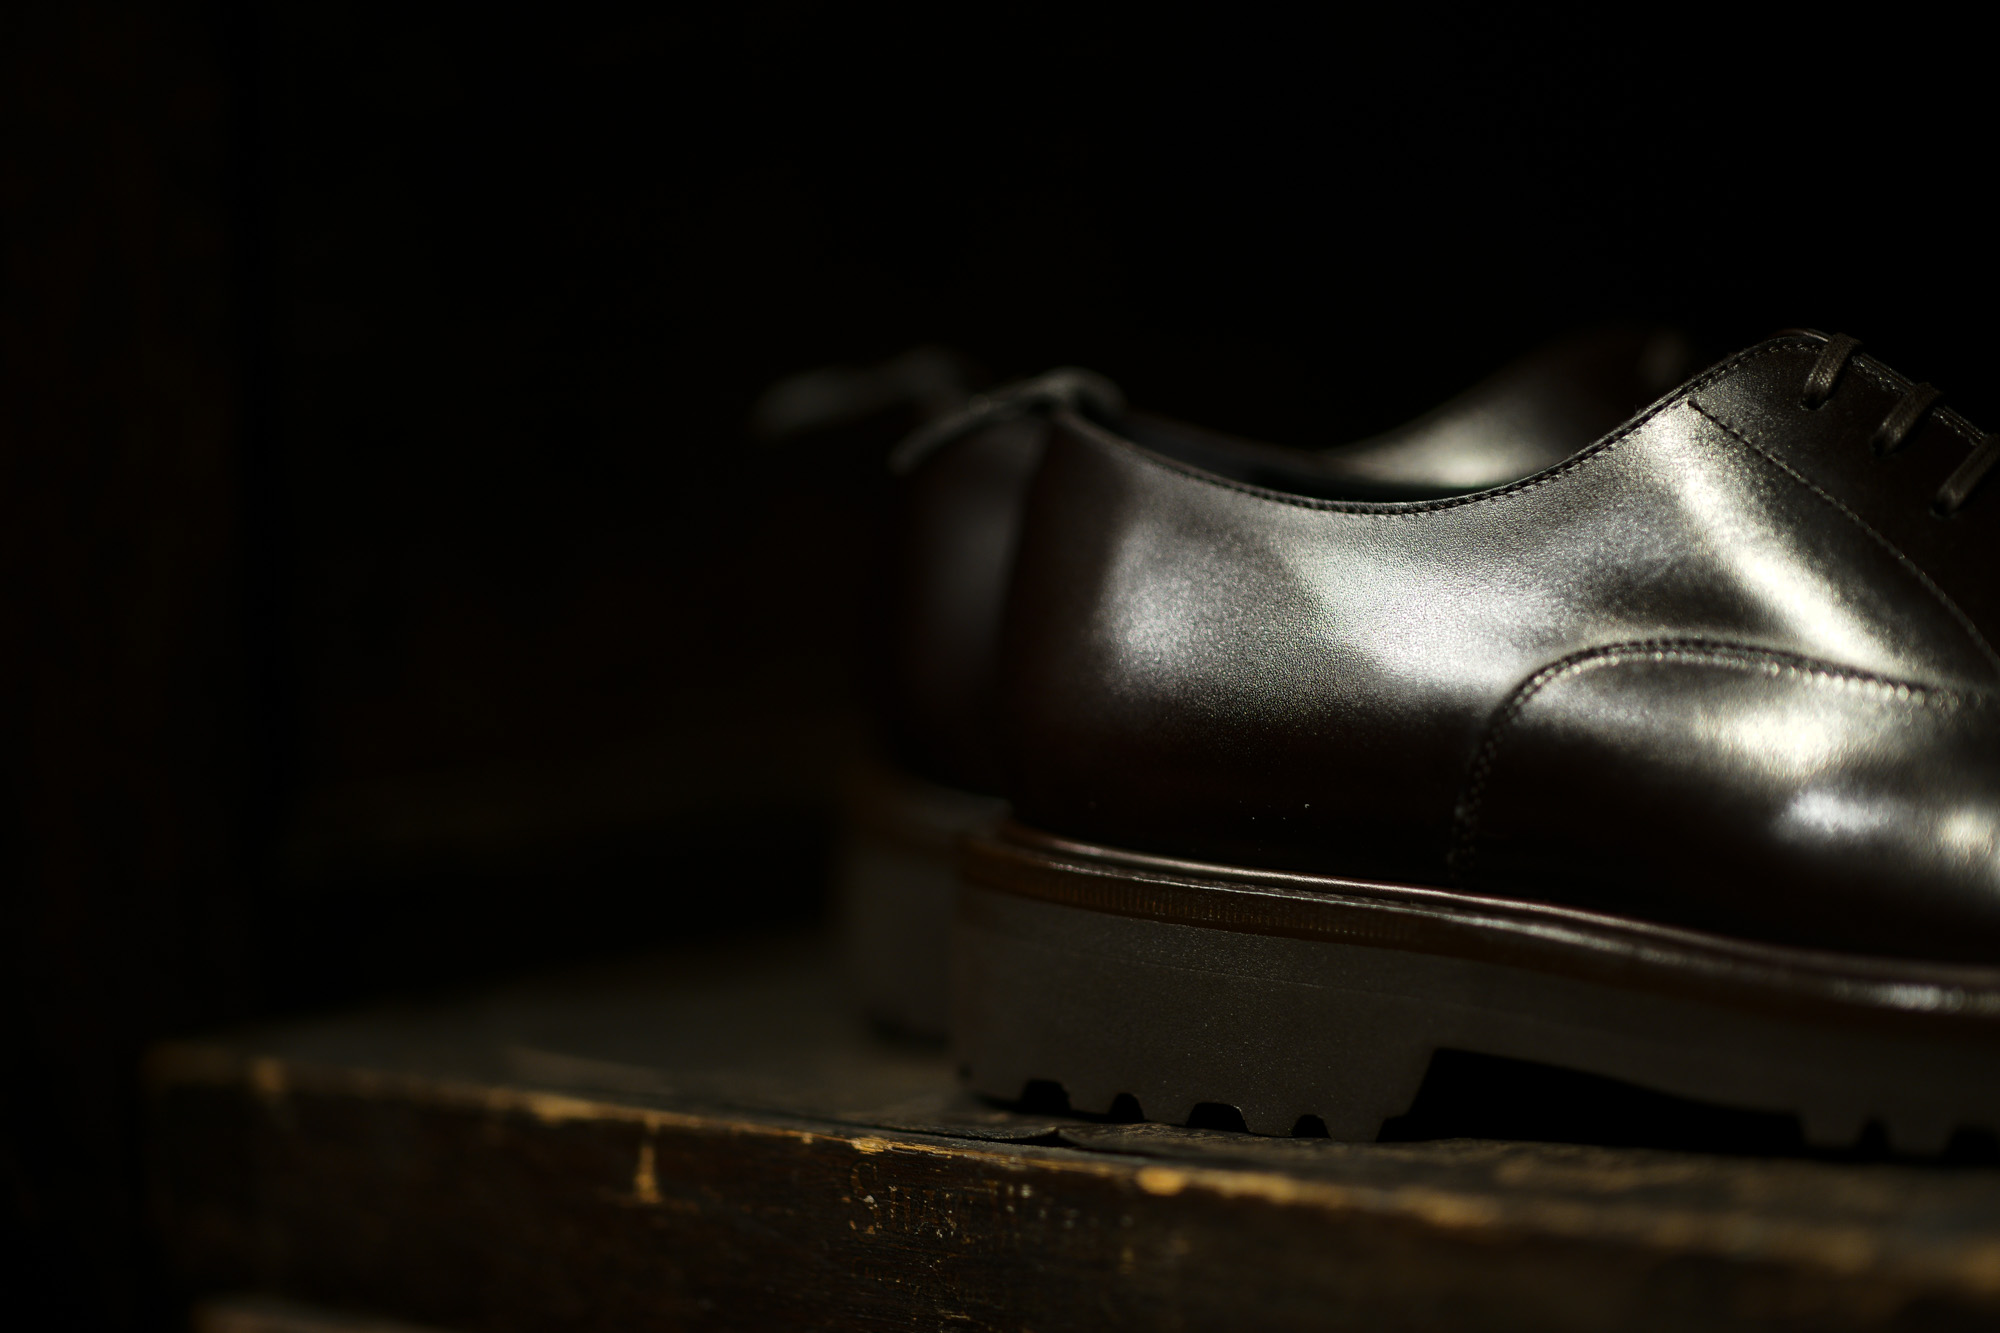 WH (ダブルエイチ) WHS-0110 Straight chip Shoes (干場氏 スペシャル モデル) Trench Last (トレンチラスト) ANNONAY Vocalou Calf Leather ストレートチップ シューズ DARK BROWN (ダークブラウン) MADE IN JAPAN(日本製) 2019 春夏新作 【2019春夏フリー分発売中】干場さん 干場スペシャル FORZASTYLE フォルザスタイル 愛知 名古屋 Alto e Diritto アルト エ デリット